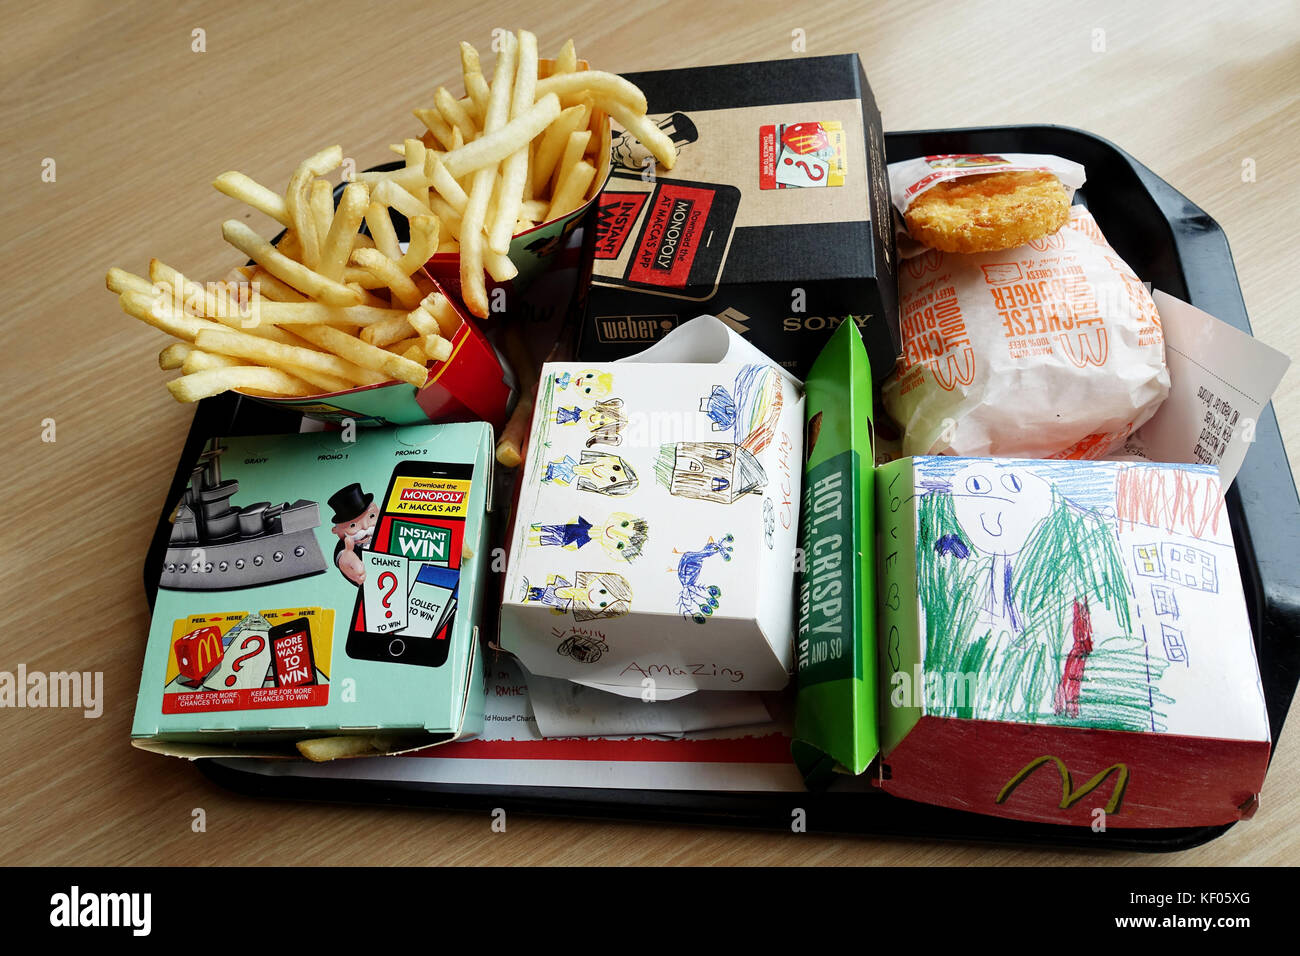 McDonald's Australia burger, fries and hash brown Stock Photo